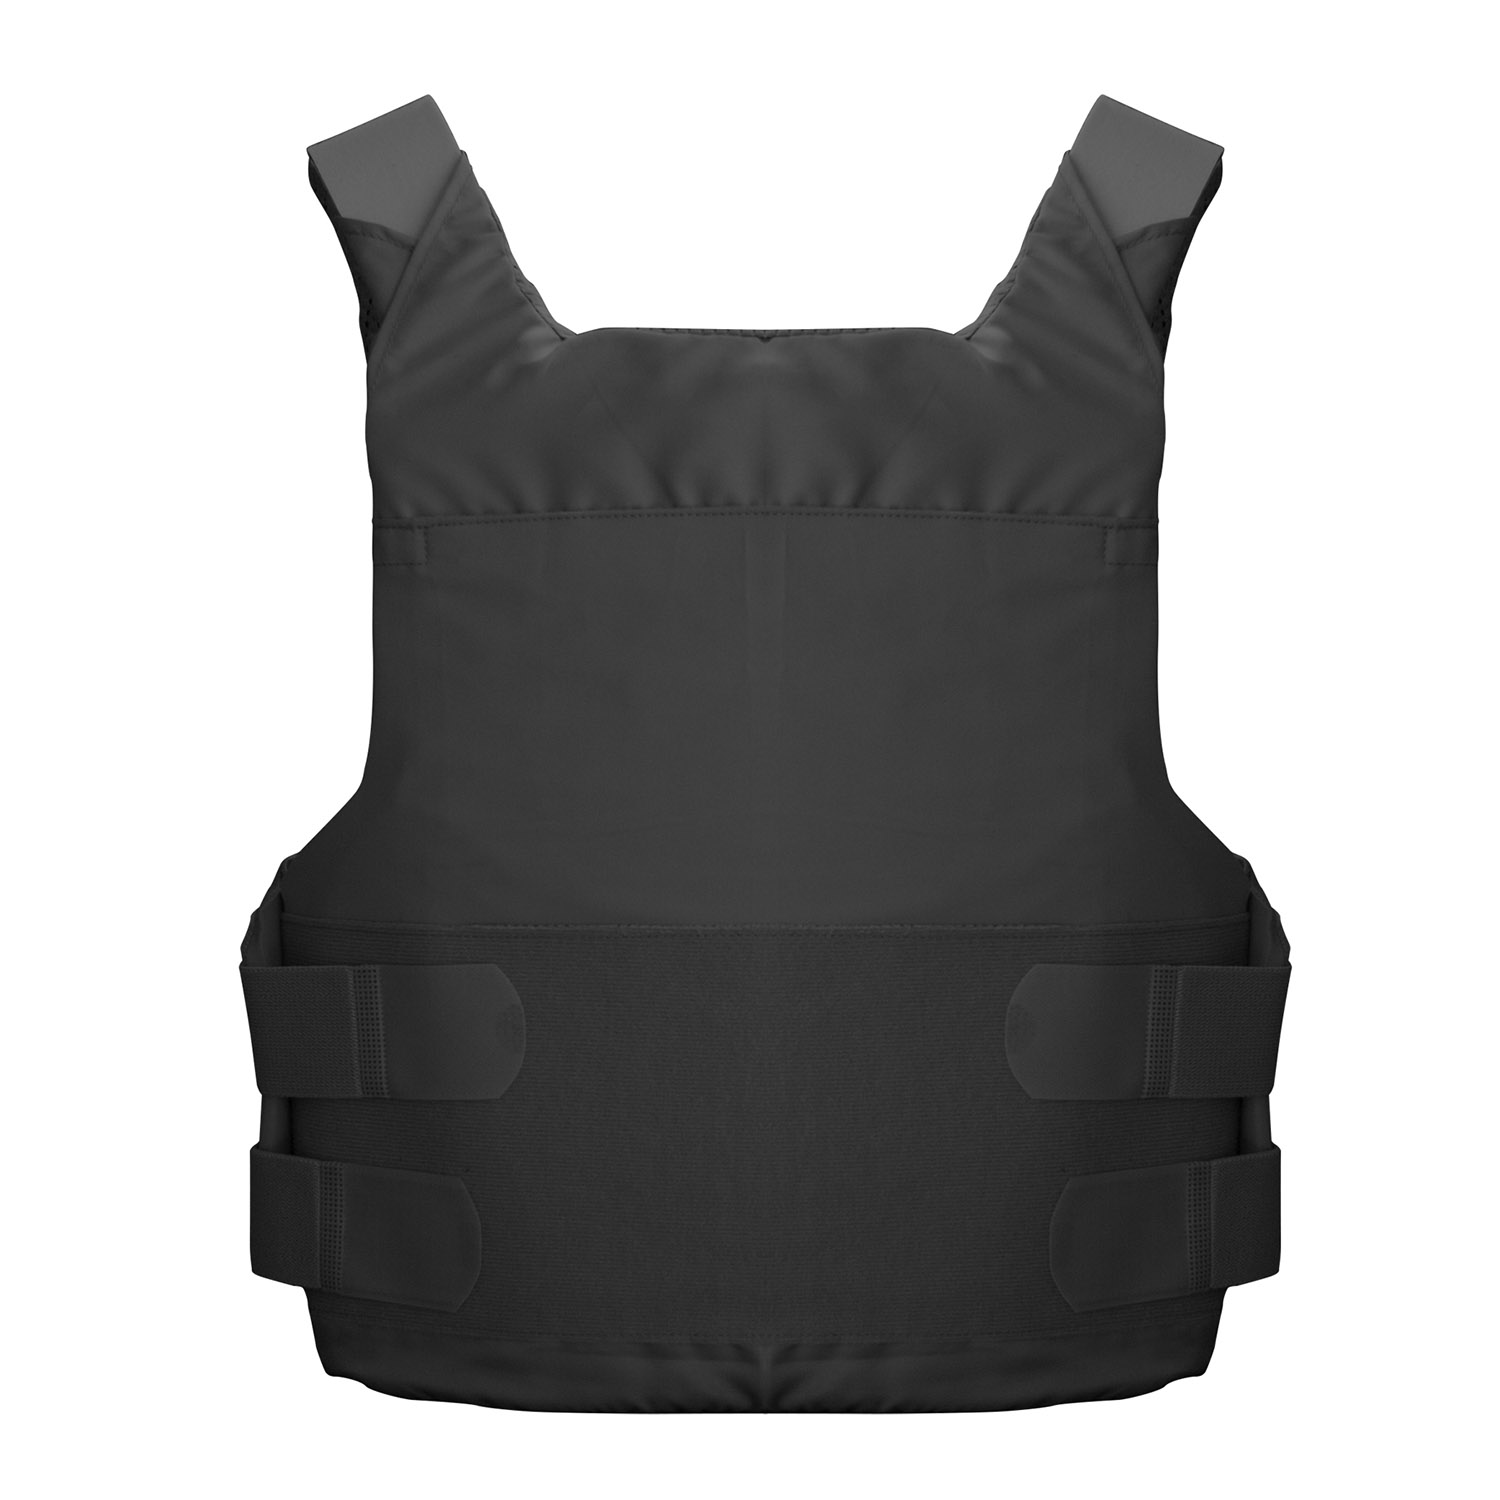 Bulletproof vest. Bulletproof Vest бронежилет. Бронежилет NFM "Thor Concealable reinforced Vest". Бронежилет Bulletproof Vest 8 кг. IOTV бронежилет черный.